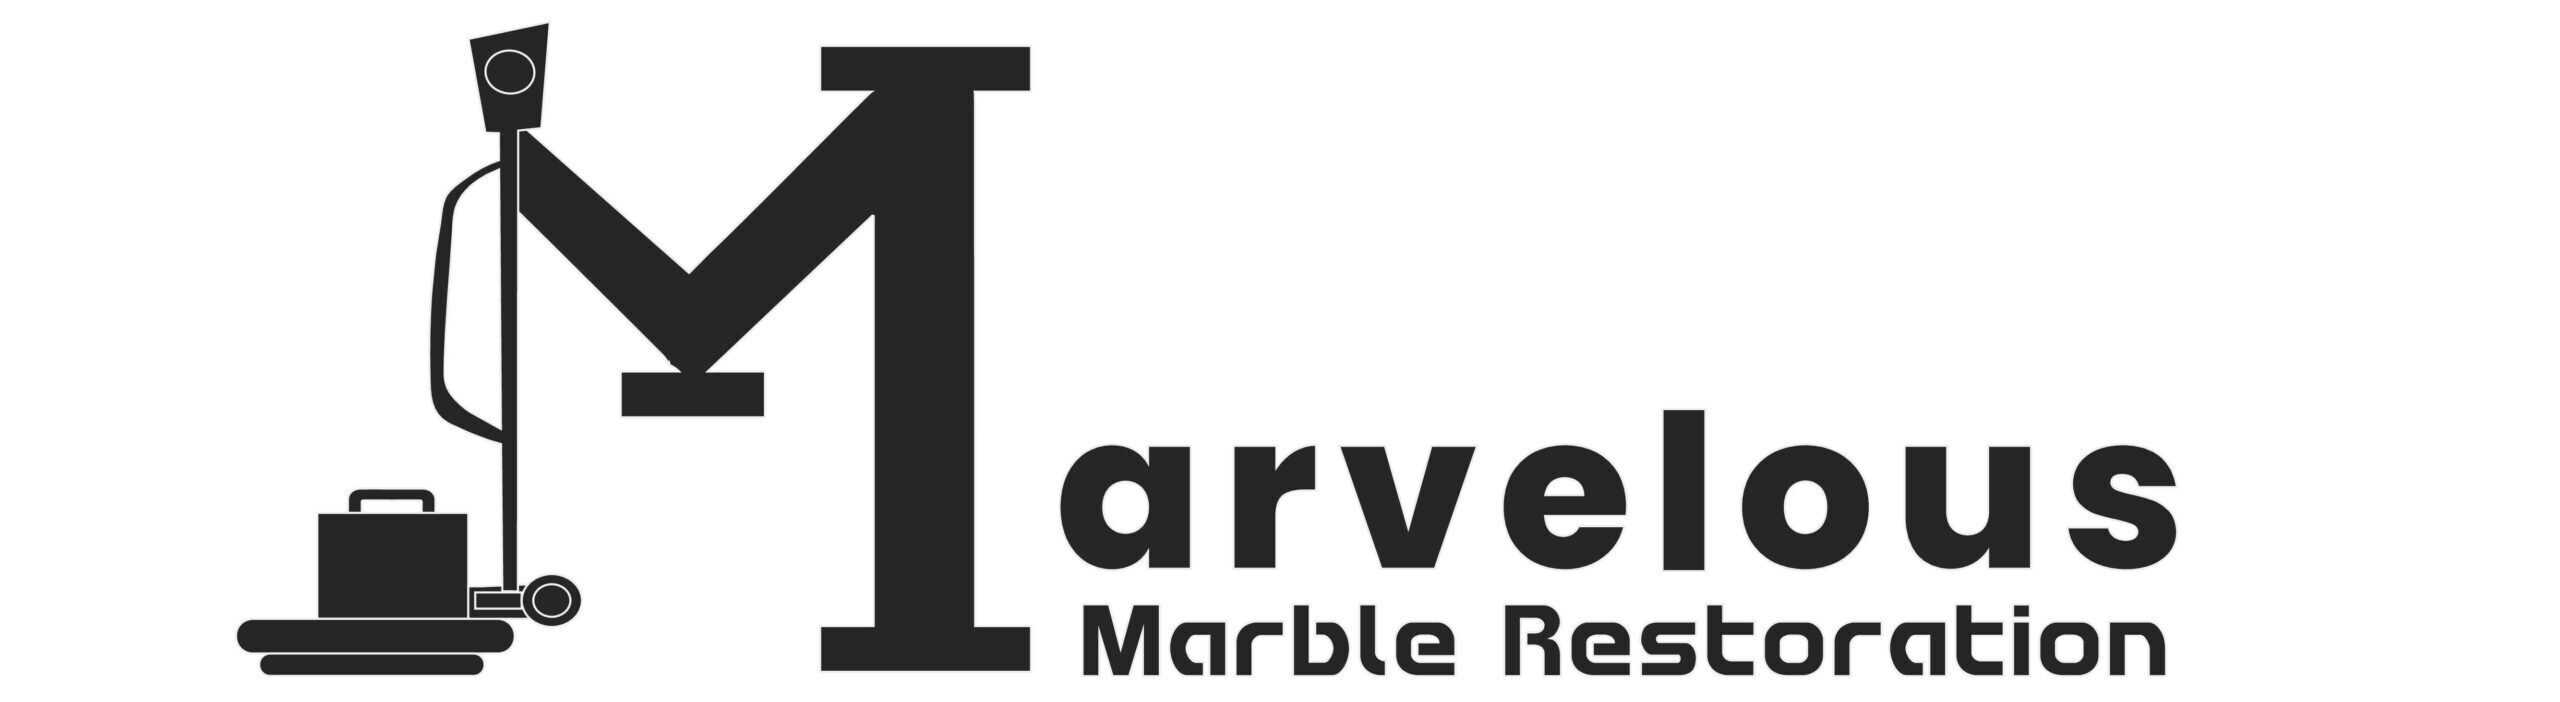 Marble Marvelous